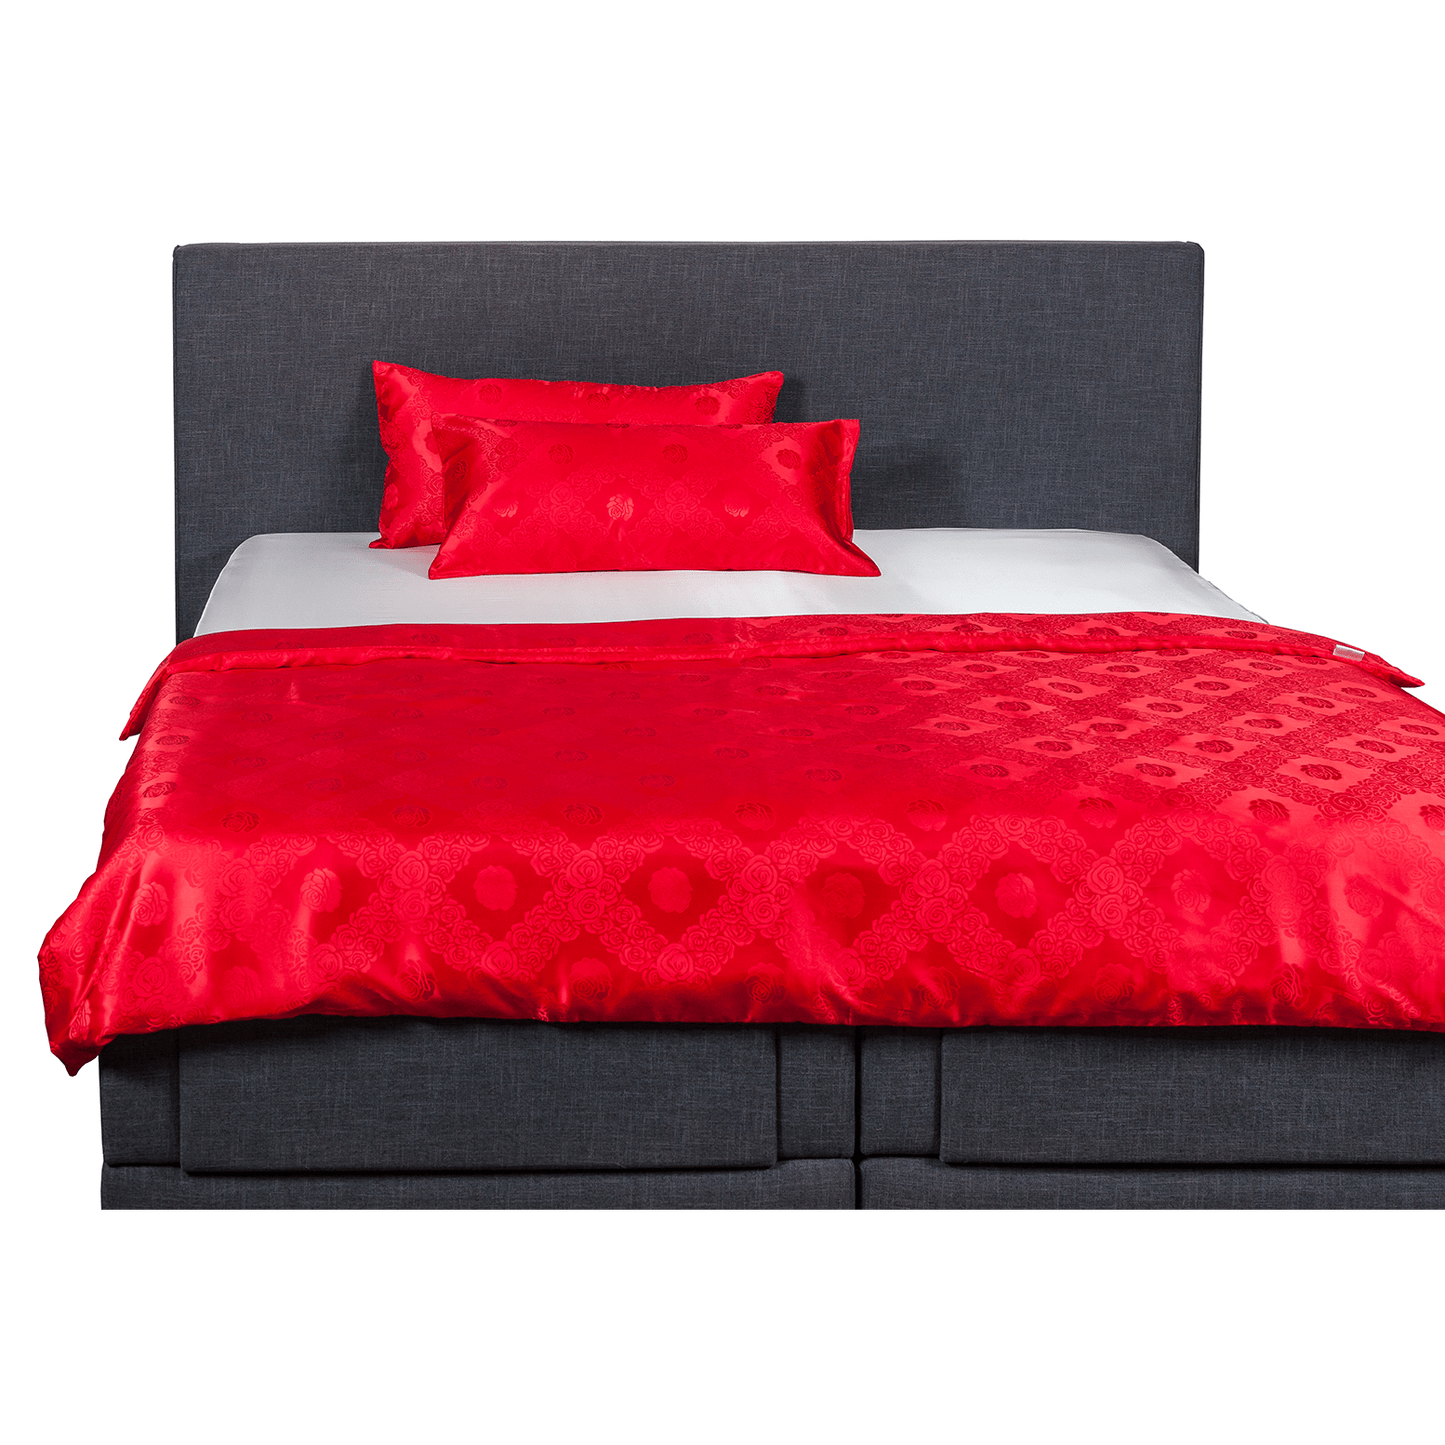 Ropa de cama de seda Boda Rosa roja